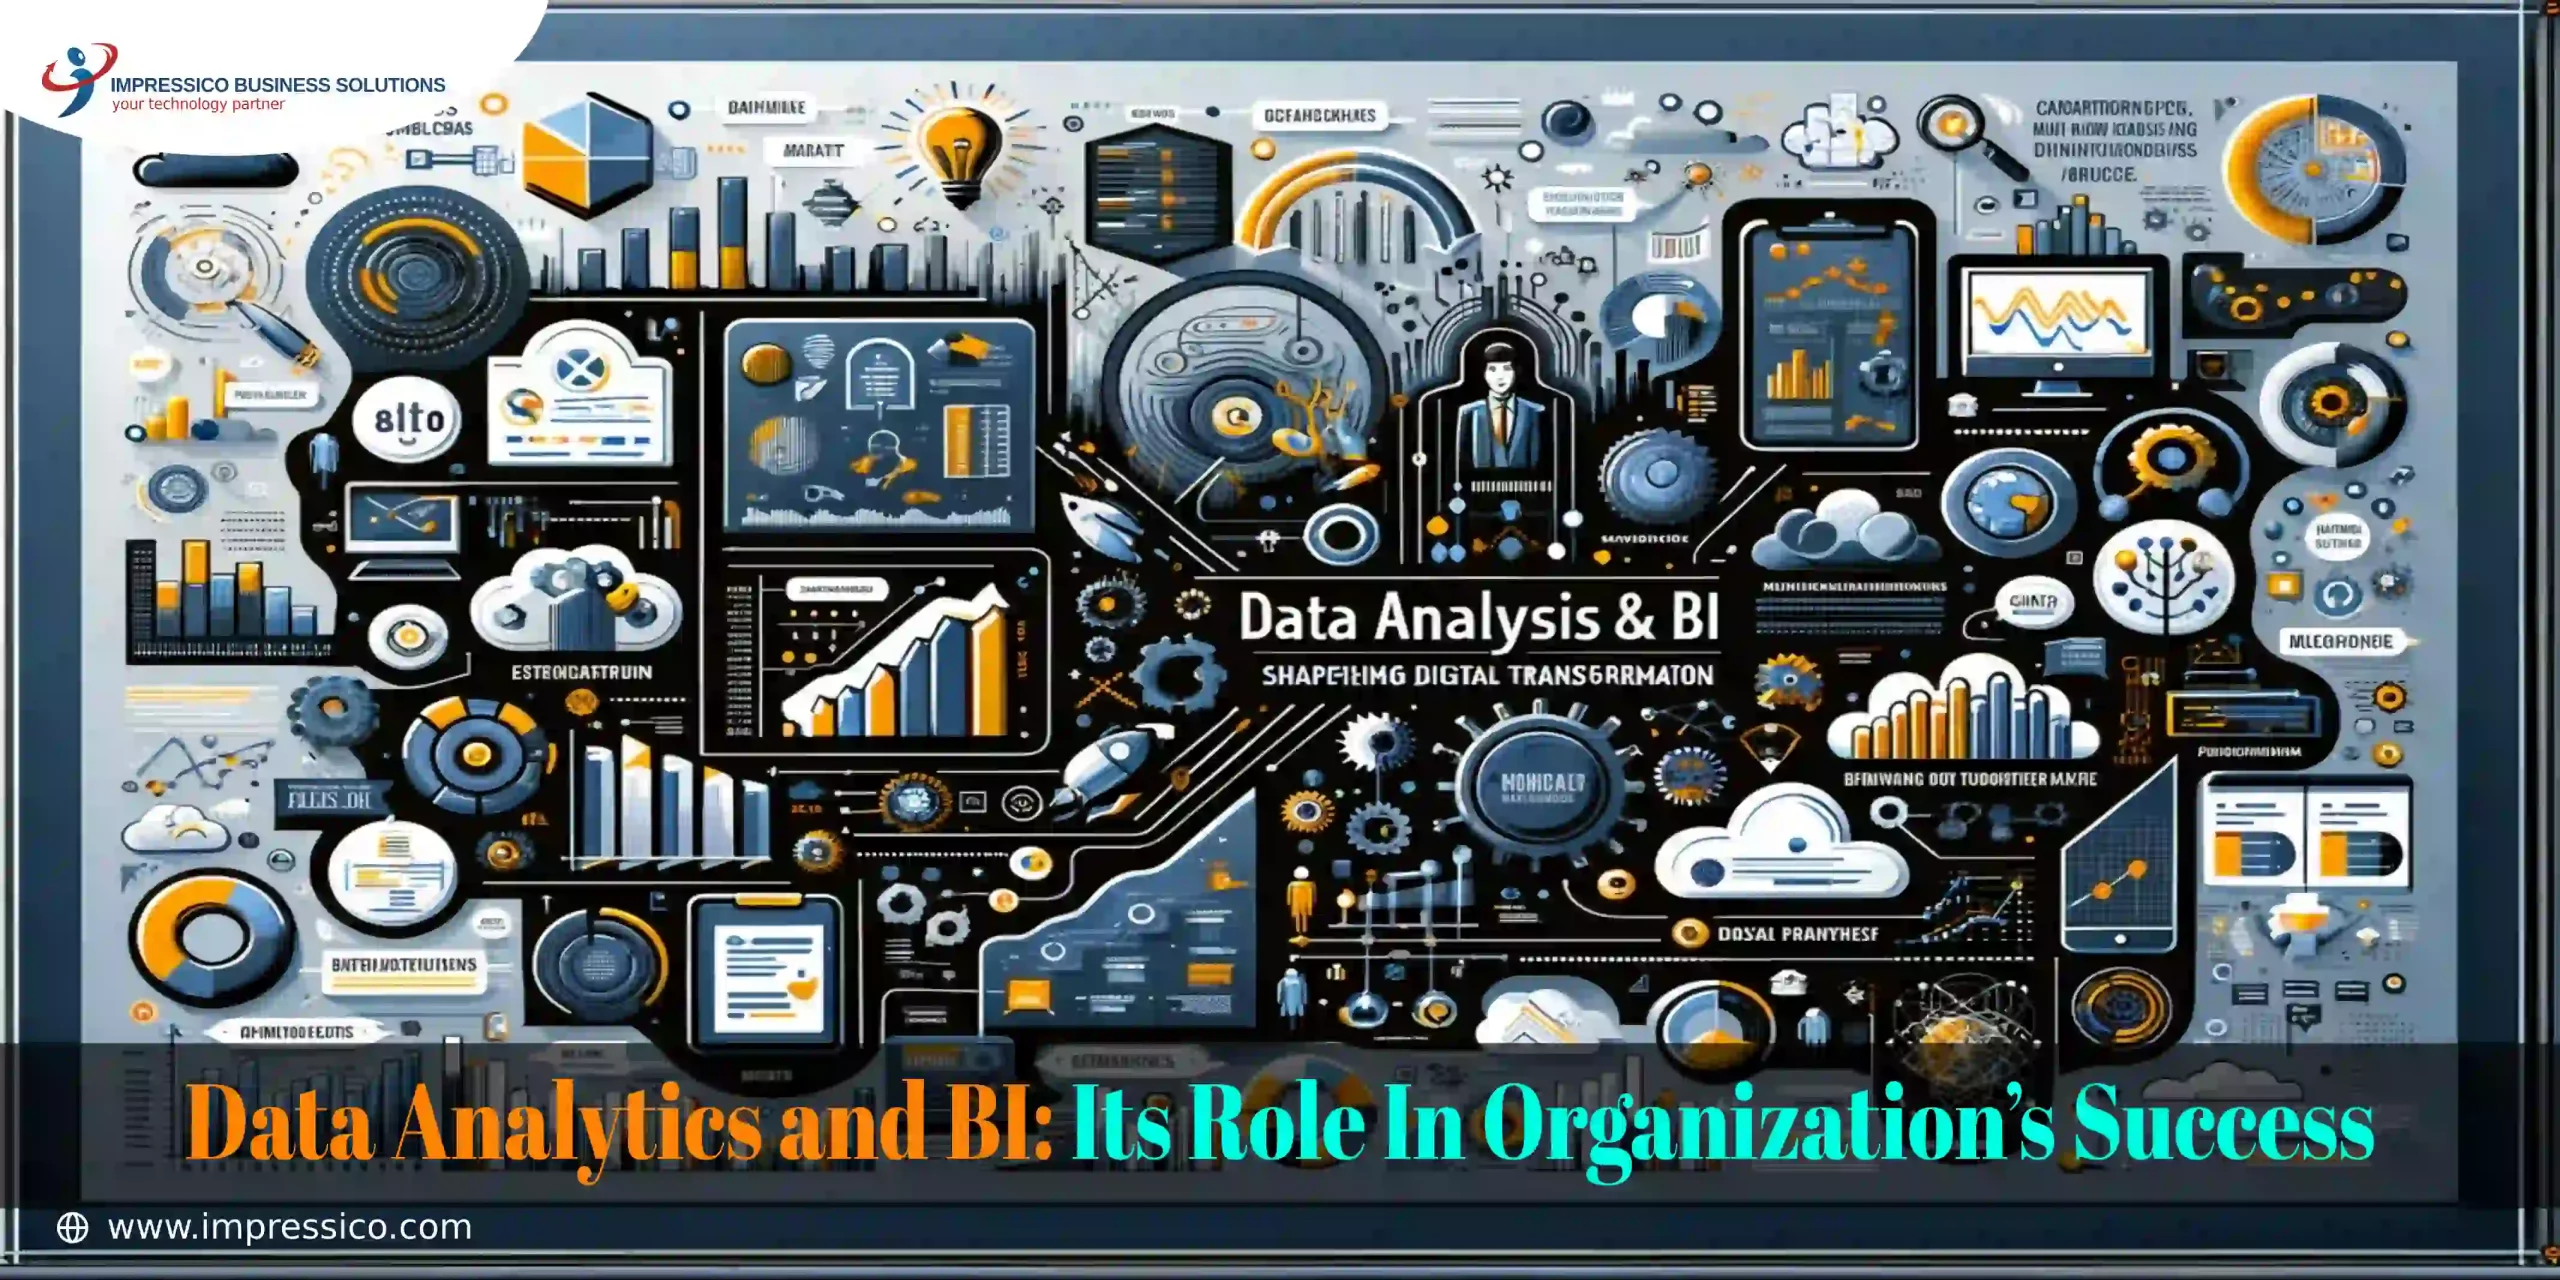 Role of Data Analytics and BI